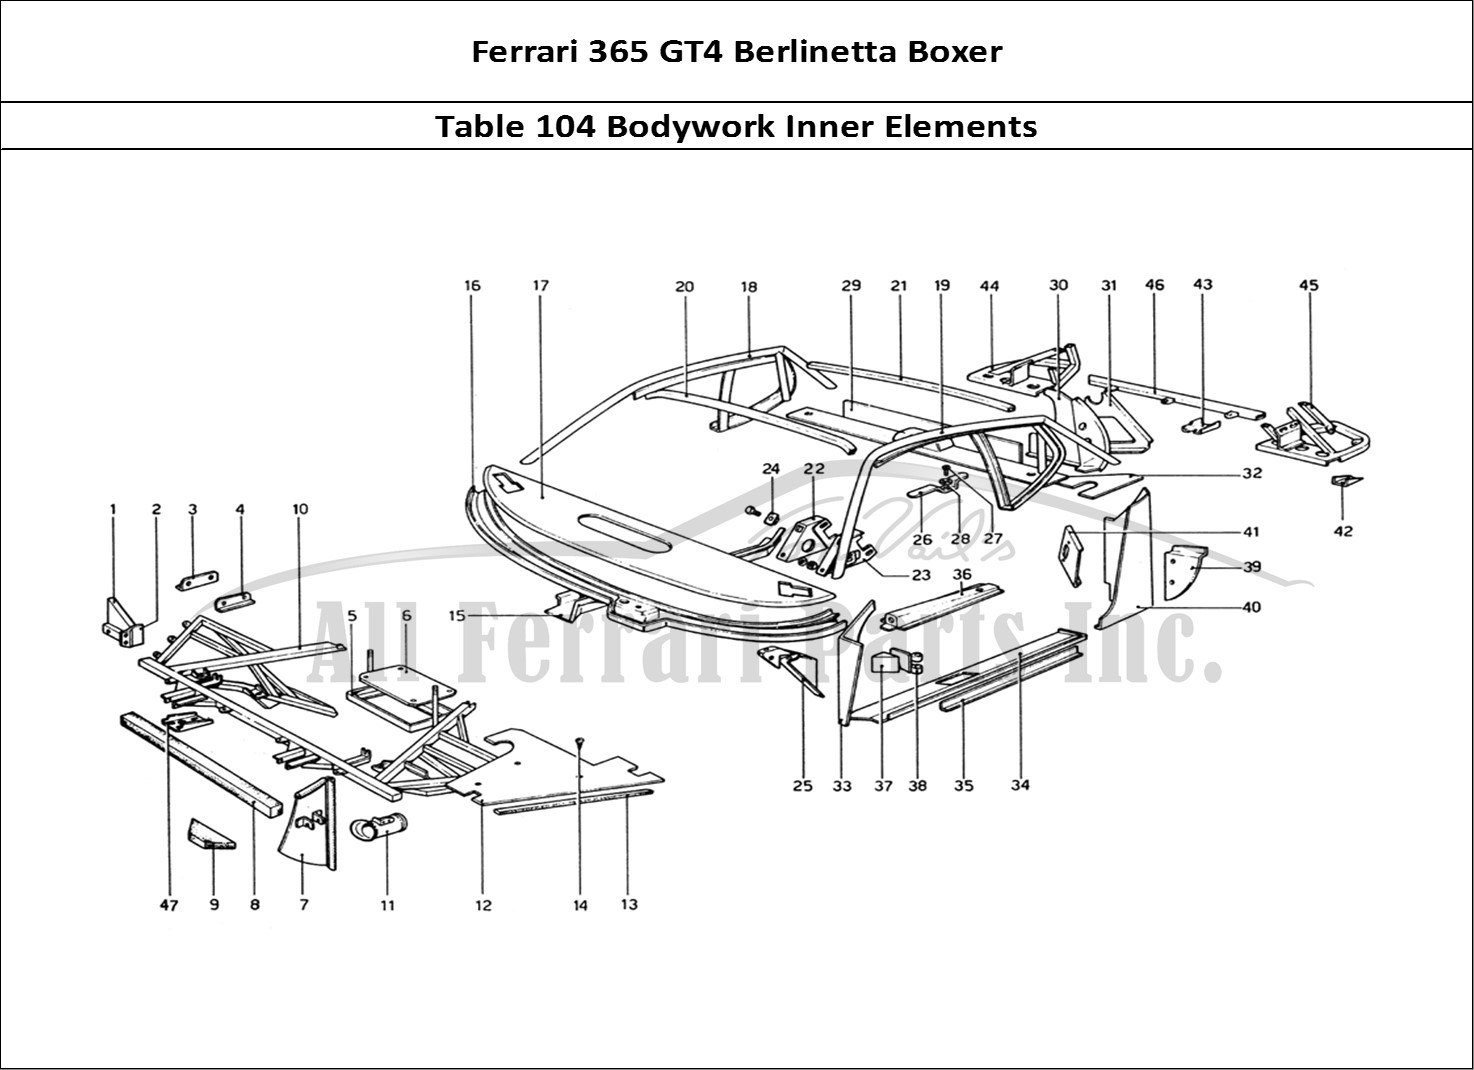 Ferrari Parts Ferrari 365 GT4 Berlinetta Boxer Page 104 Body Shell - Inner Elemen